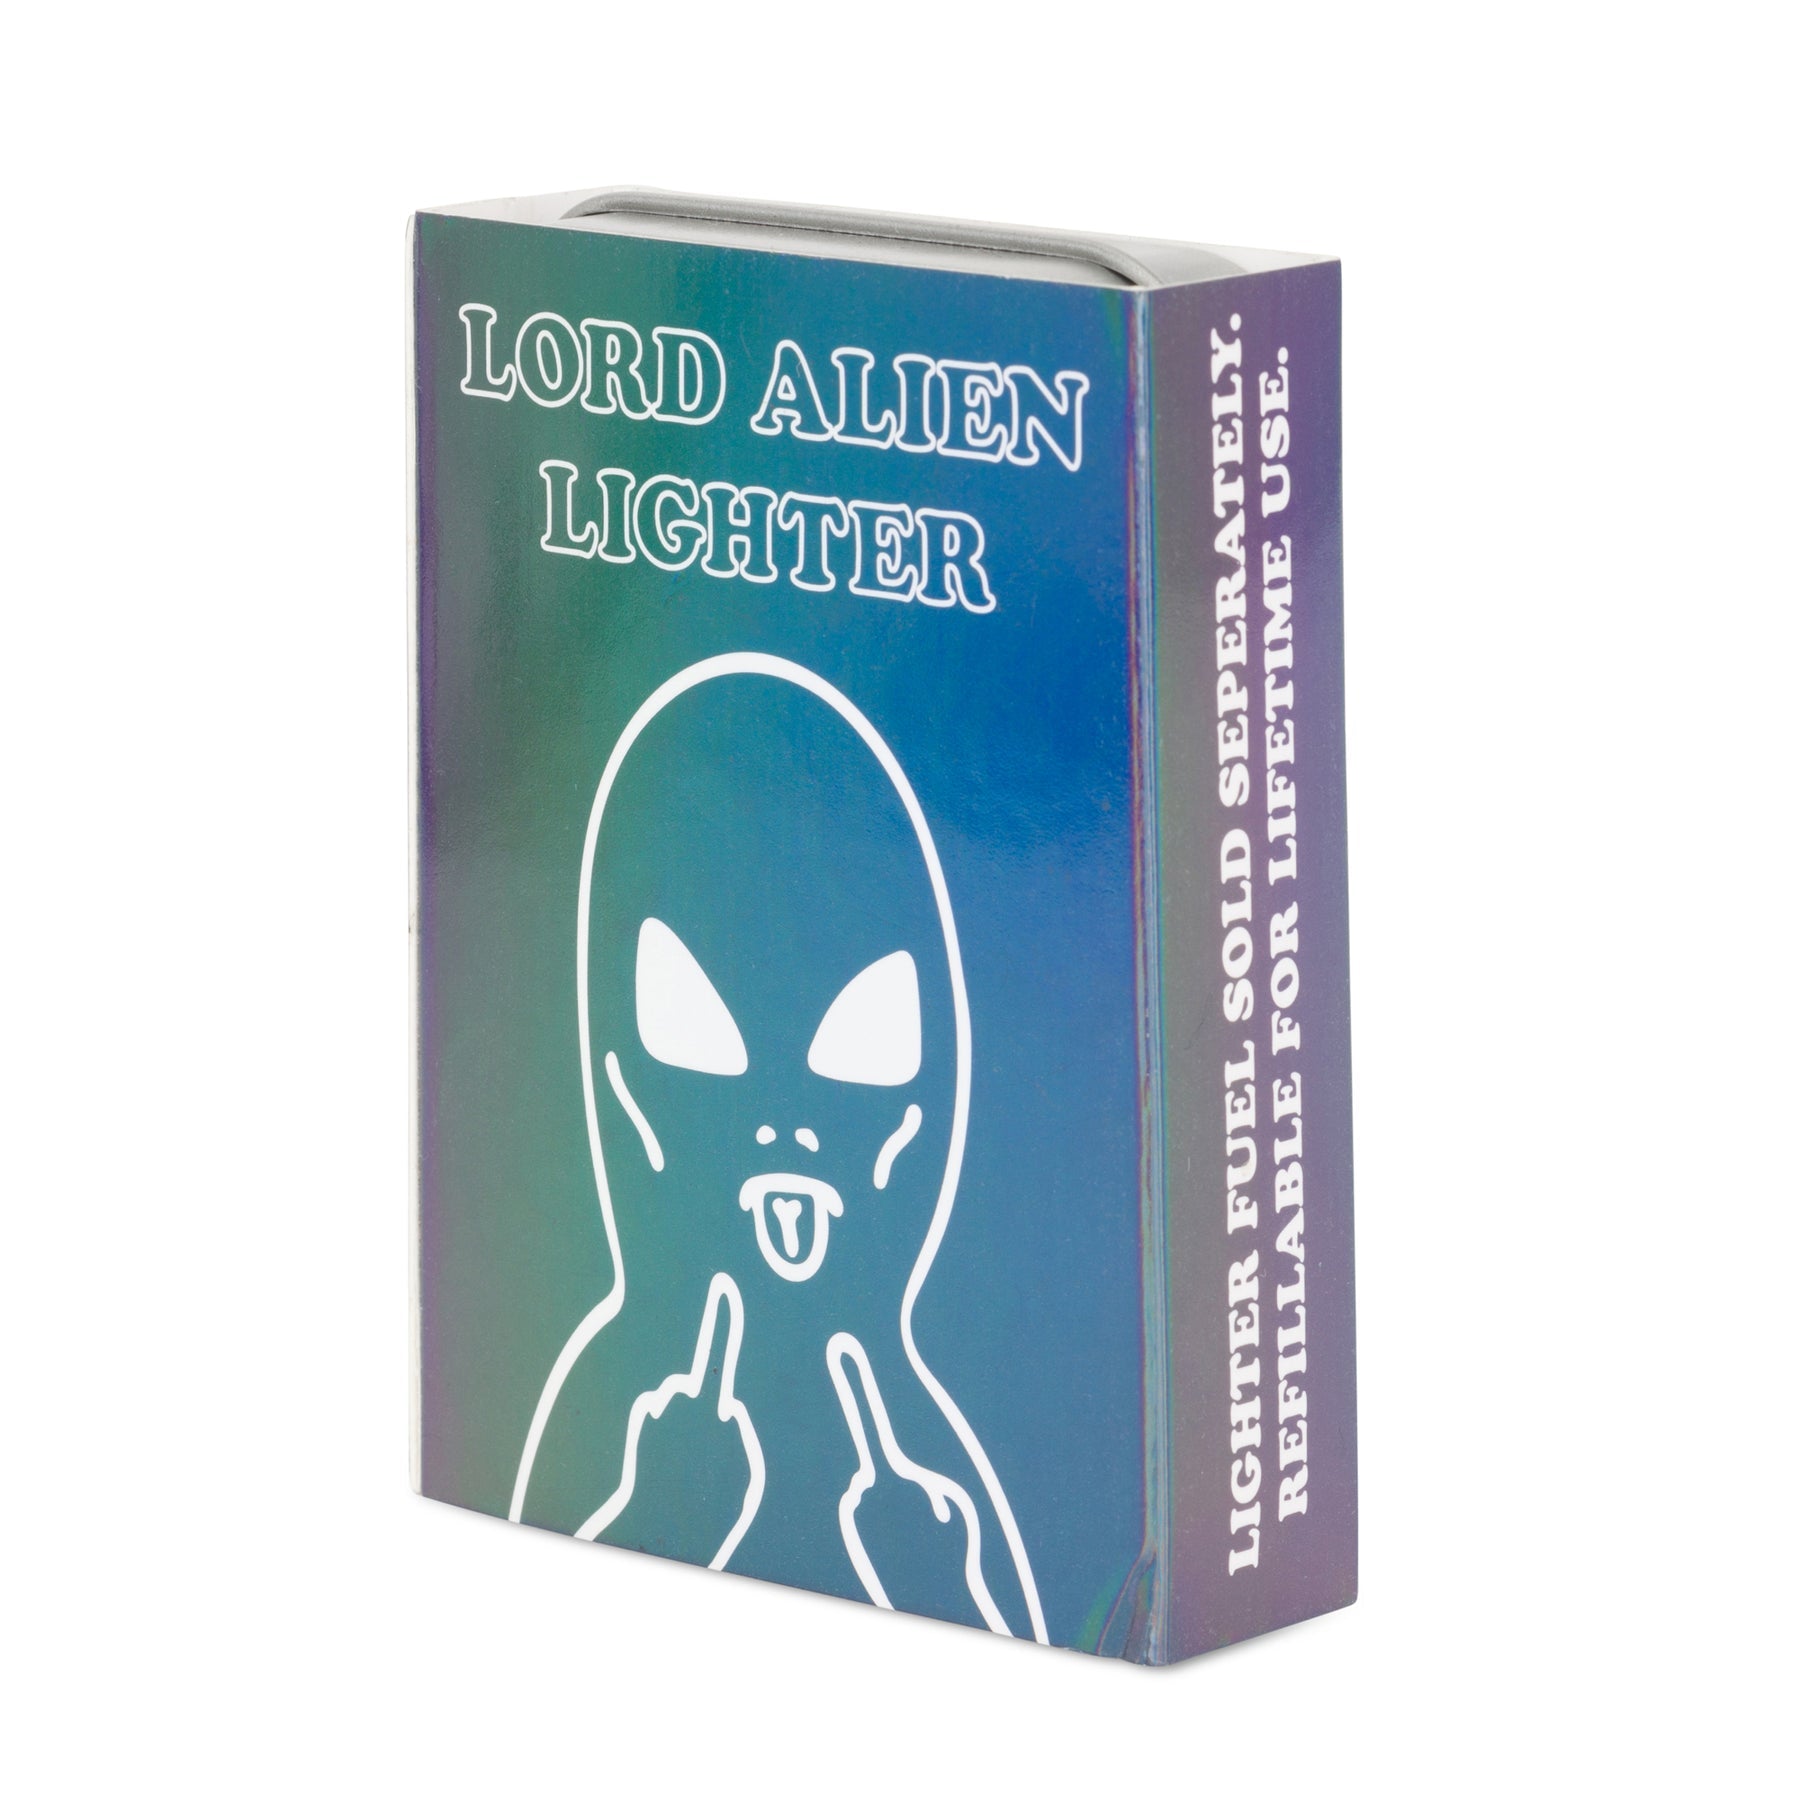 Lord Alien Lighter